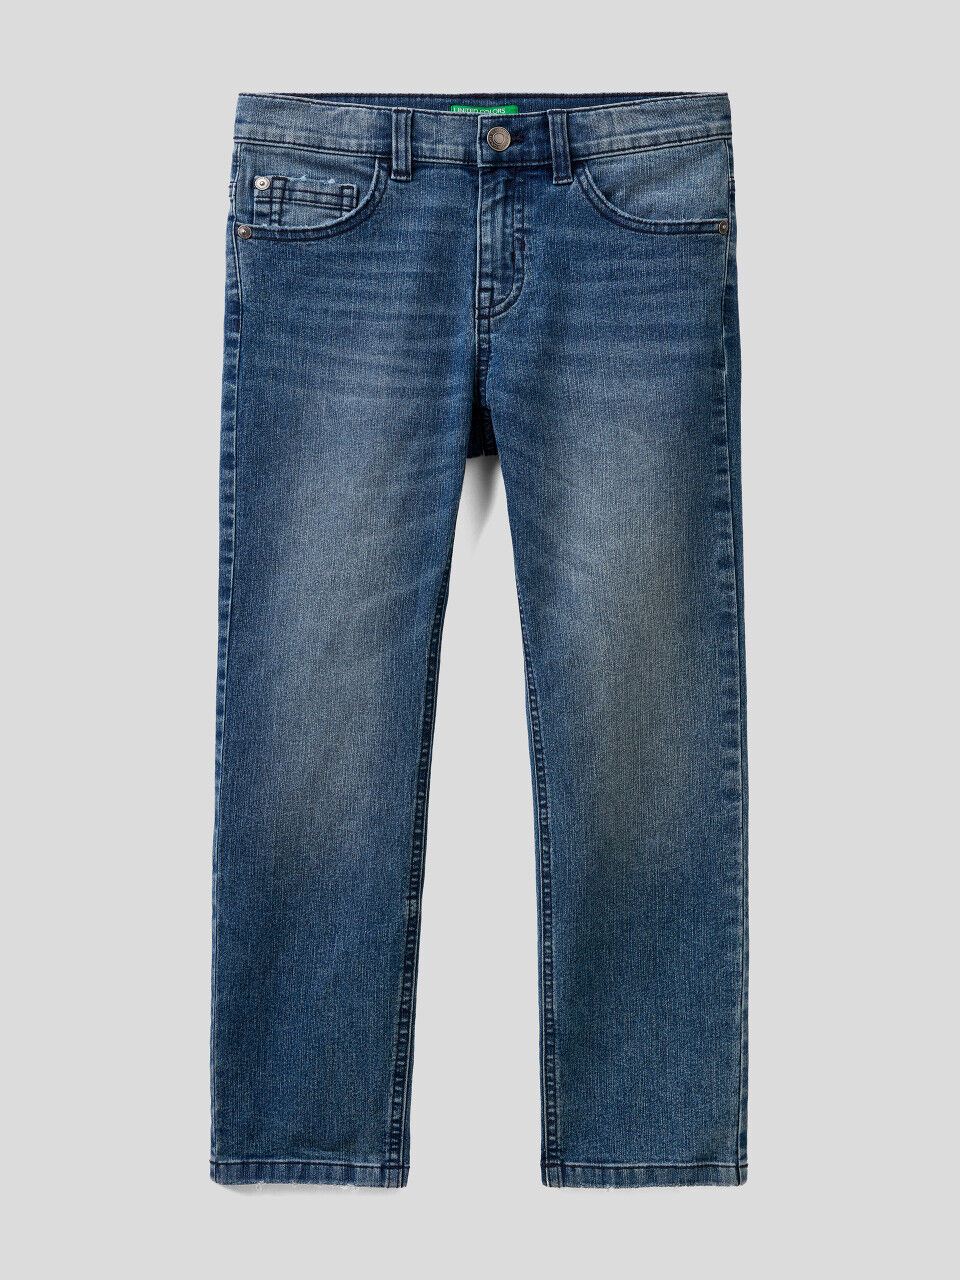 LVB-551Z AUTHENTIC STRAIGHT JEANS Jeans Bambini e Ragazzi Amazon Abbigliamento Pantaloni e jeans Jeans Jeans straight 8 Anni 